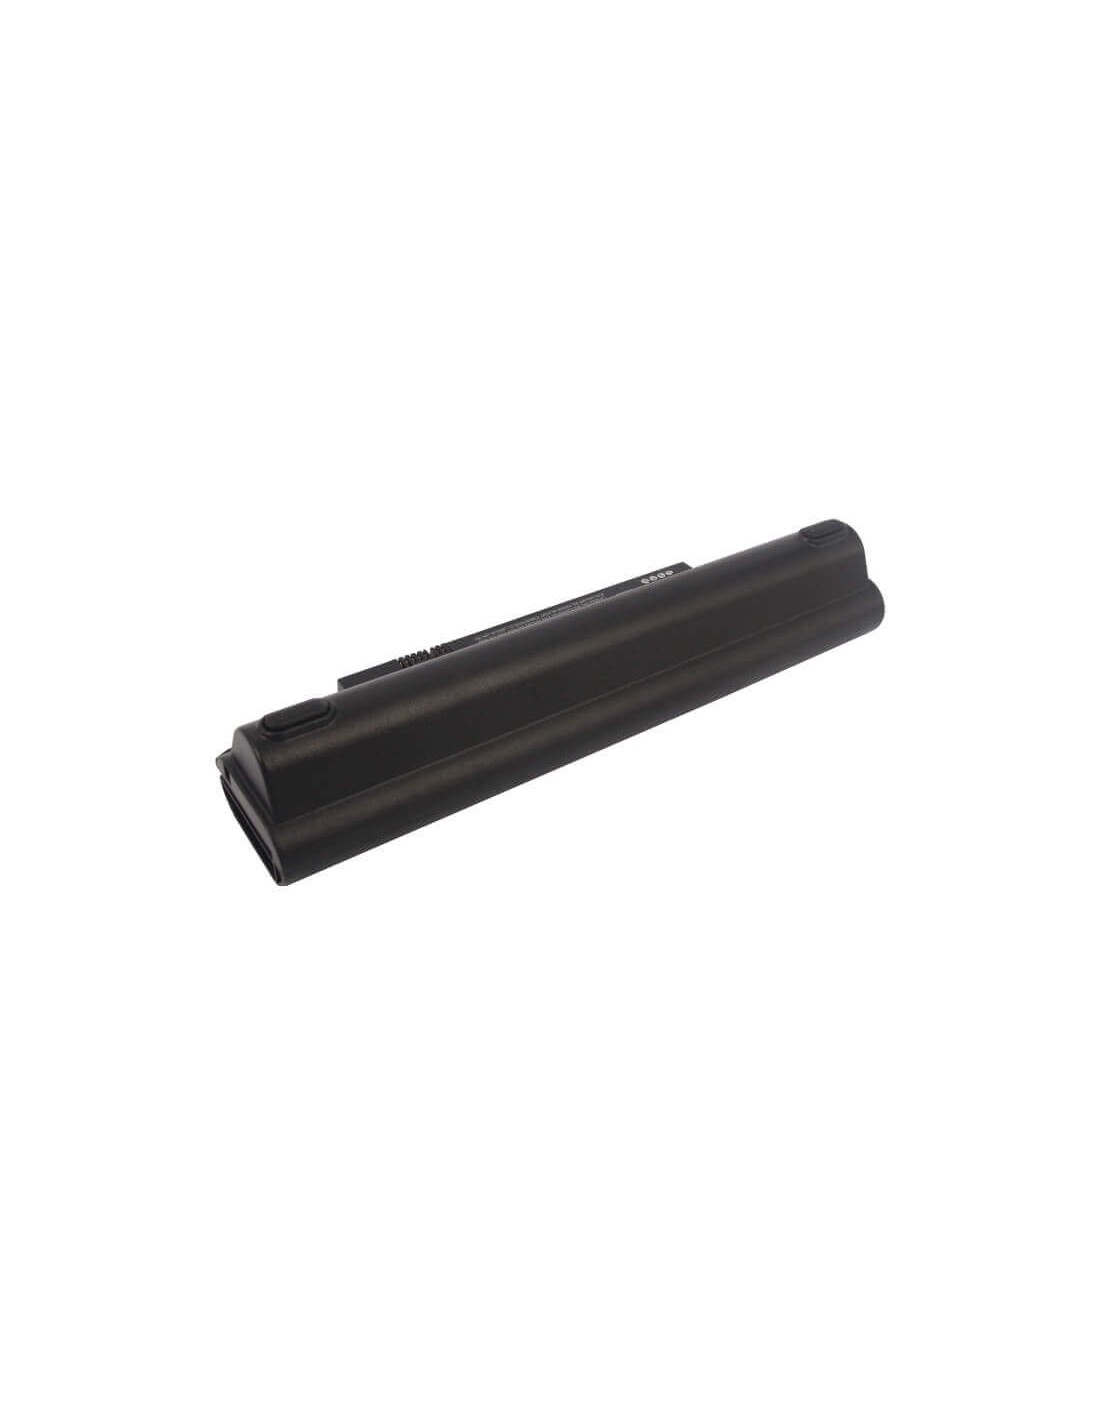 Black Battery for Lenovo Thinkpad E120 30434nc, Thinkpad E120 30434sc, Thinkpad E120 30434tc 11.1V, 6600mAh - 73.26Wh